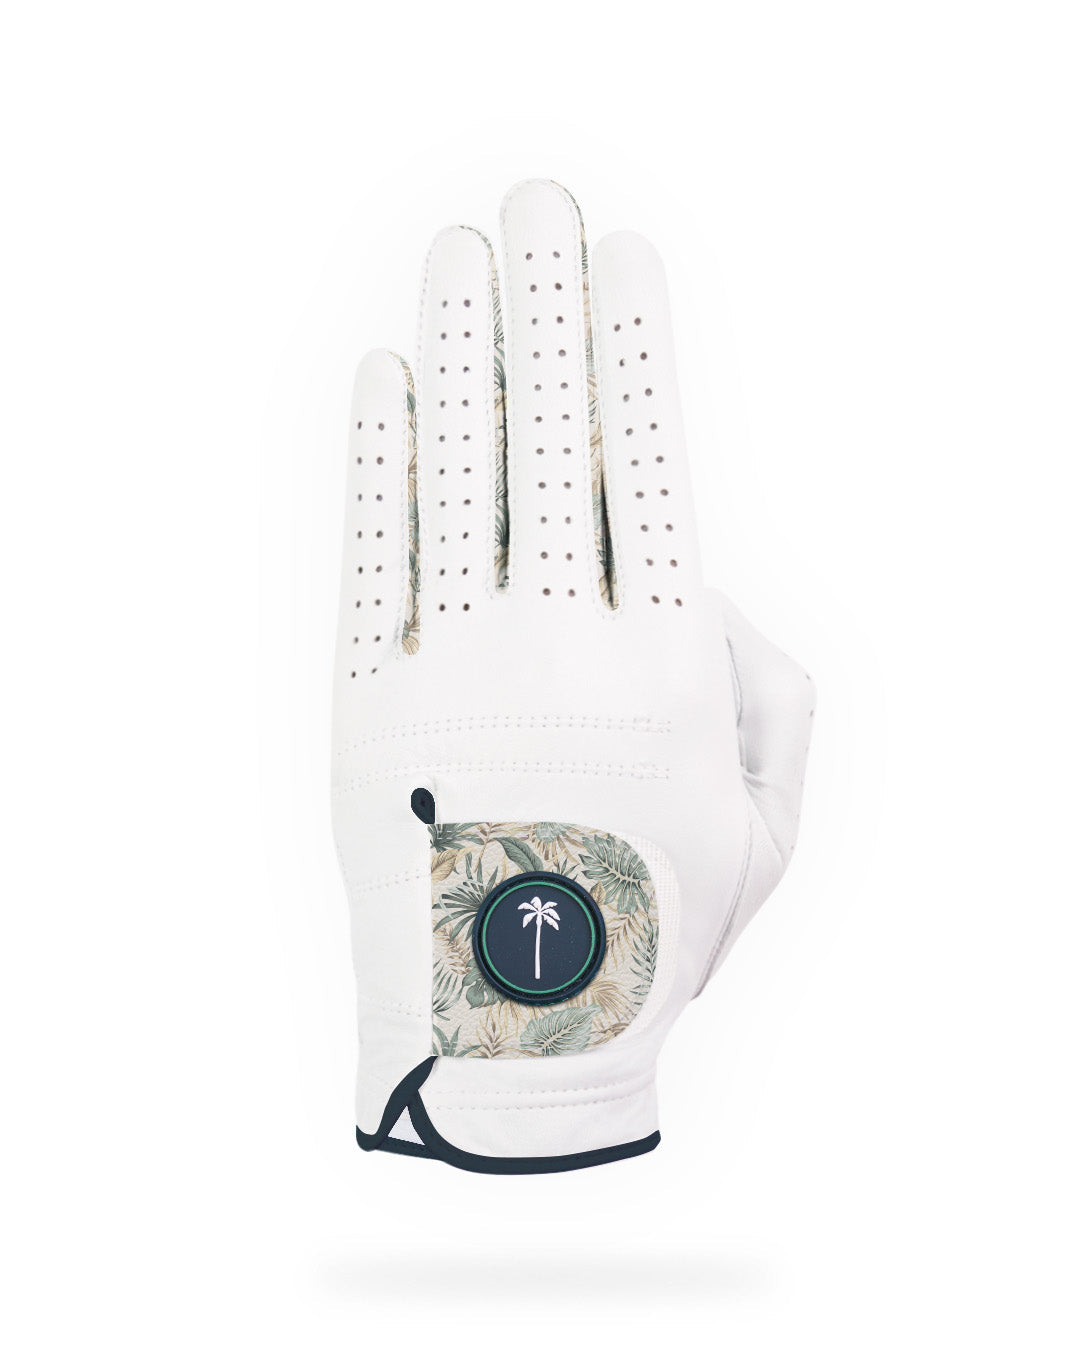 Palm Golf Co. Men's Coastline Glove